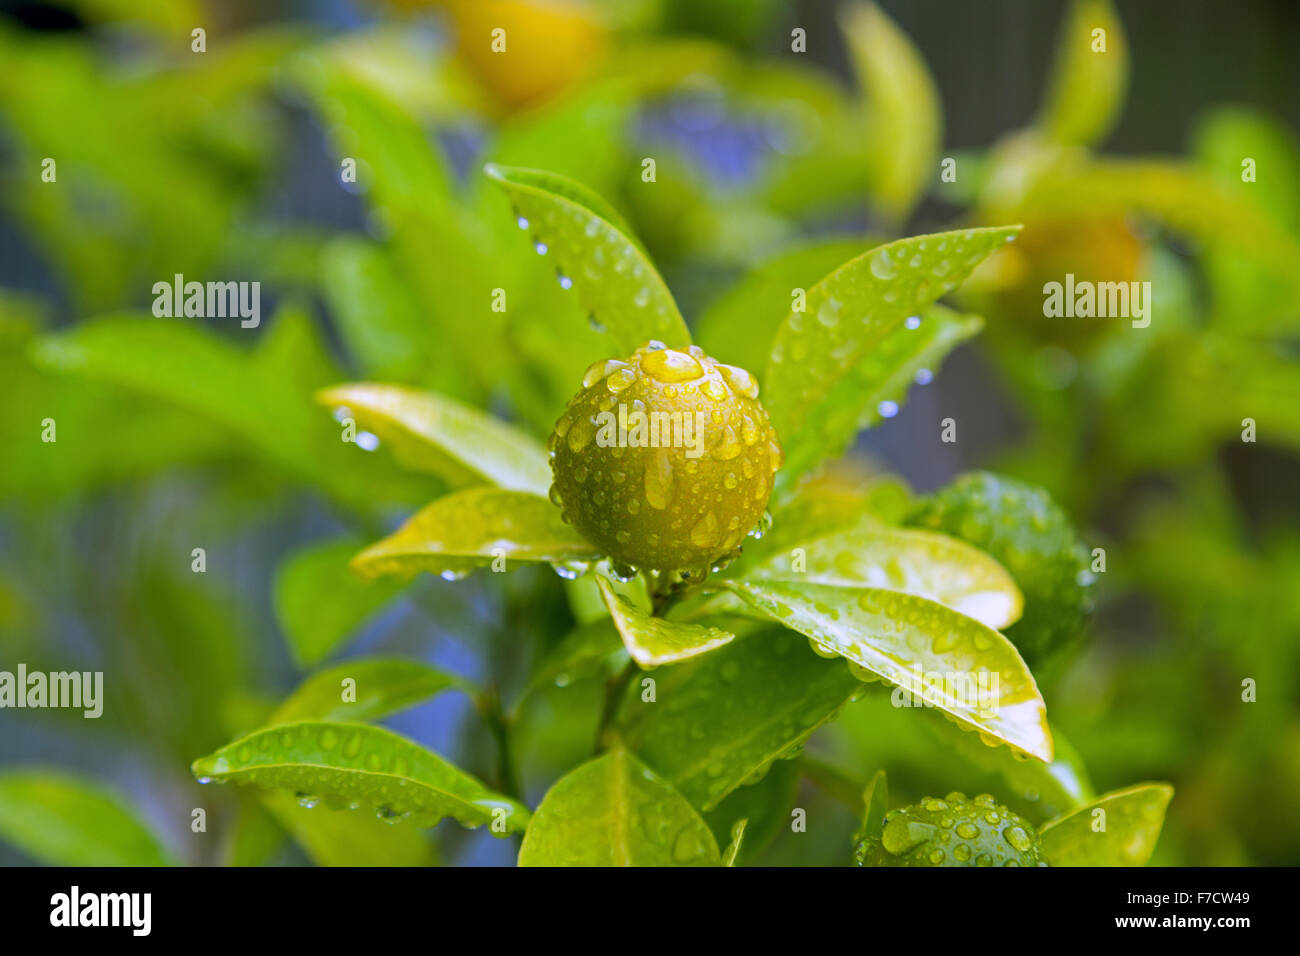 Calamondin citrus tree Stock Photo